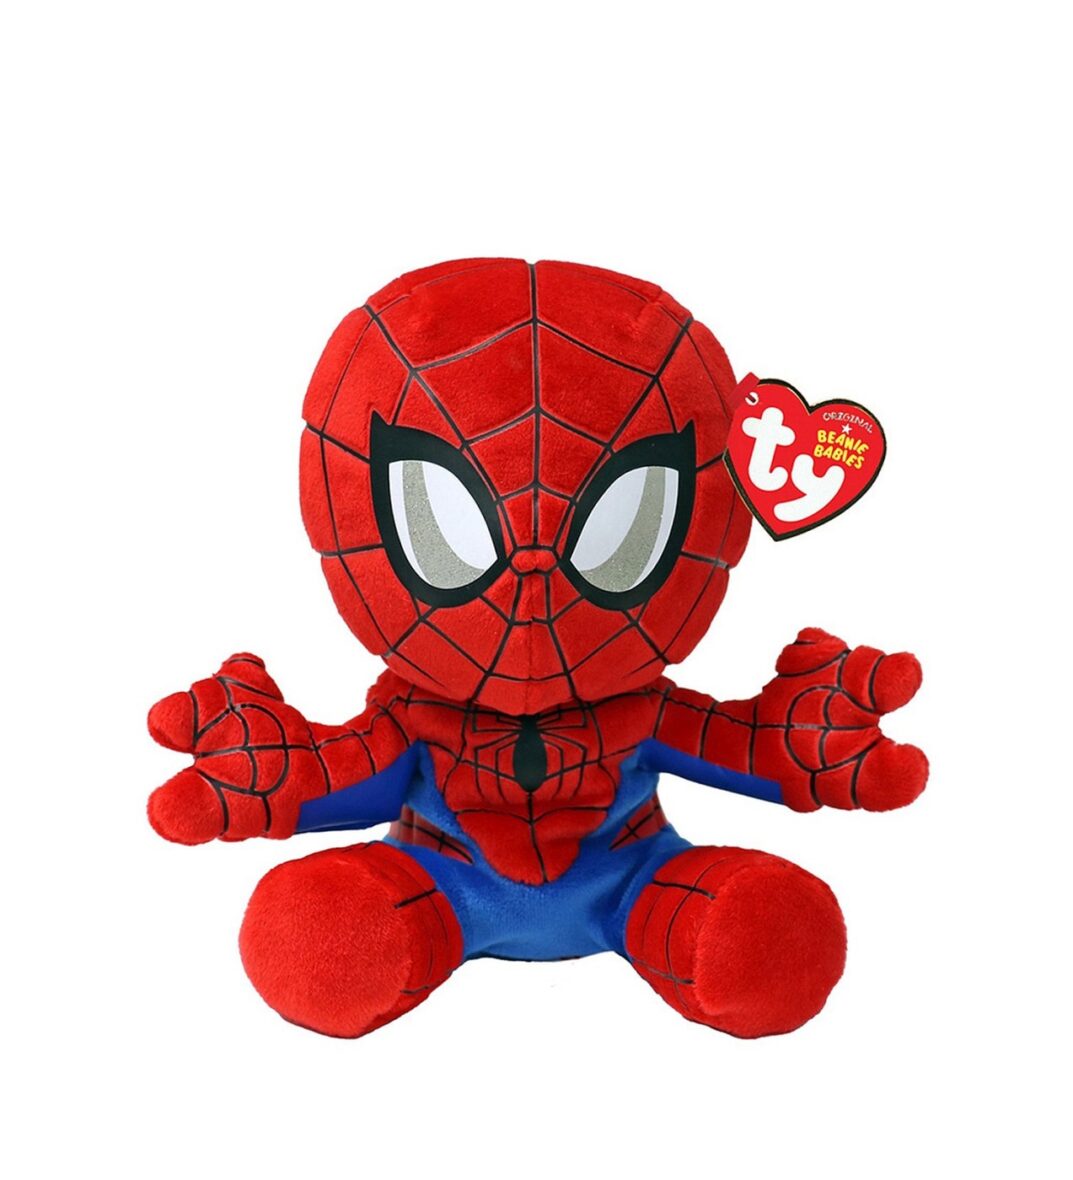 Plus Ty 15cm Beanie Babies Soft Marvel Spiderman